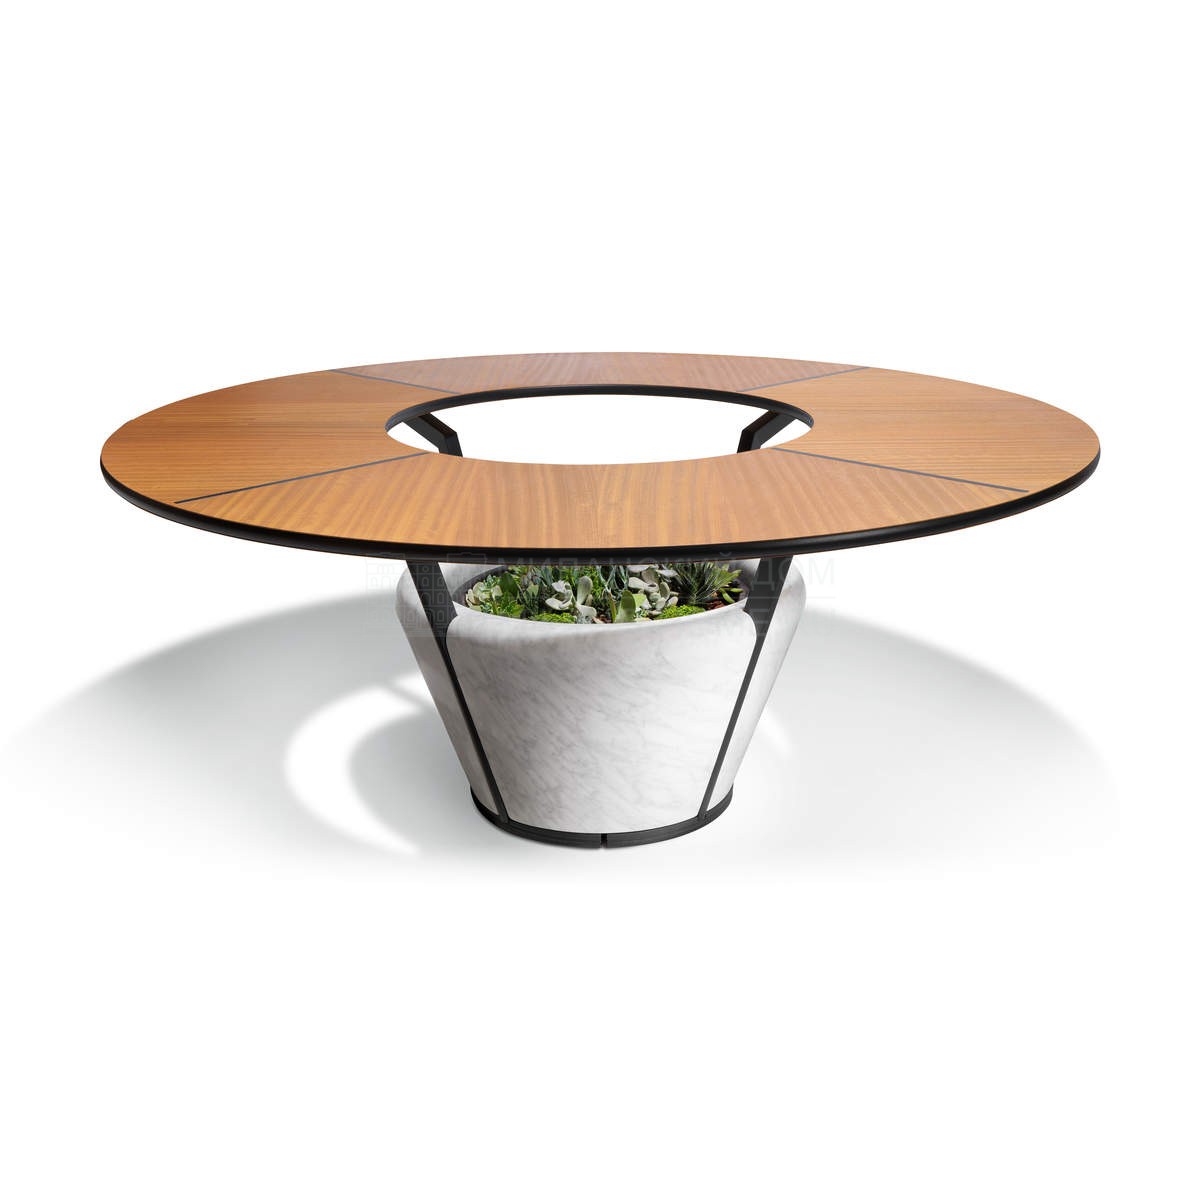 Обеденный стол Wing dining table из Италии фабрики IPE CAVALLI VISIONNAIRE